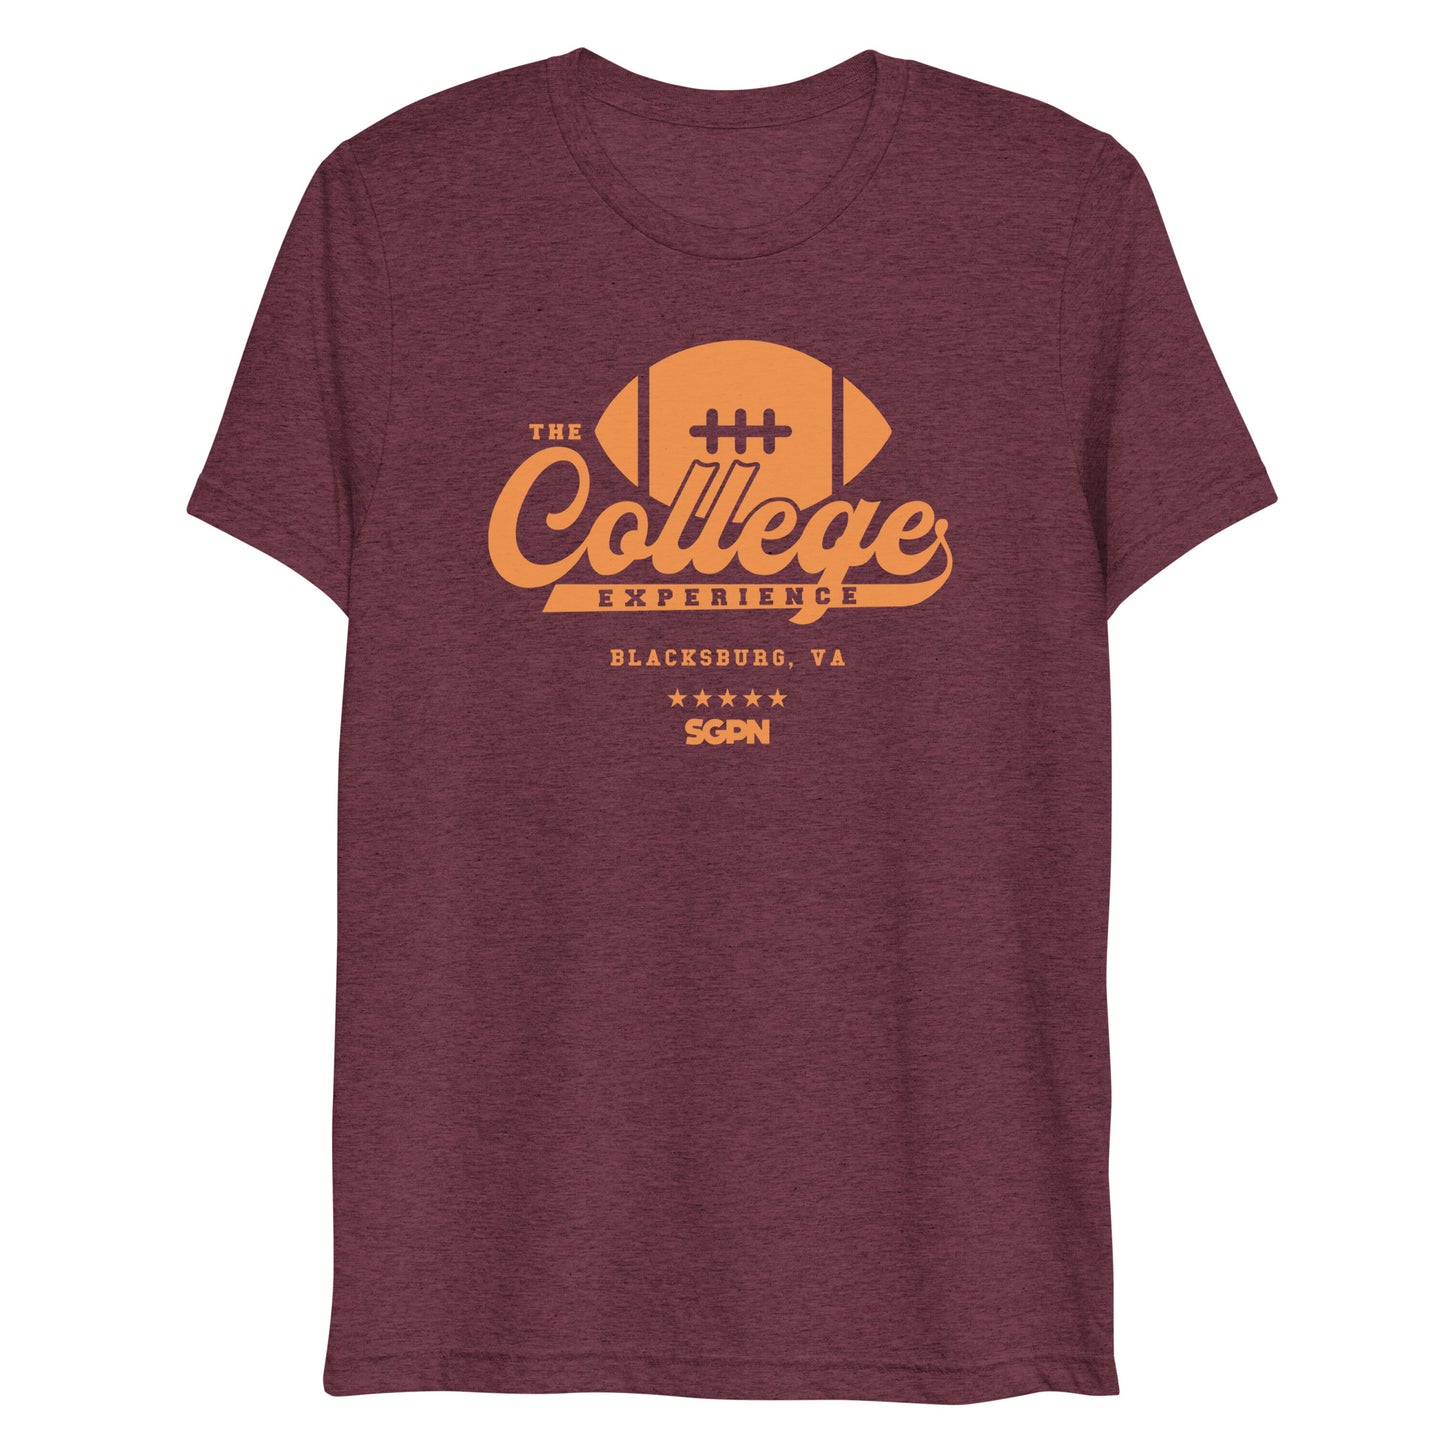 The College Football Experience - Blacksburg edition - Maroon Short sleeve t-shirt